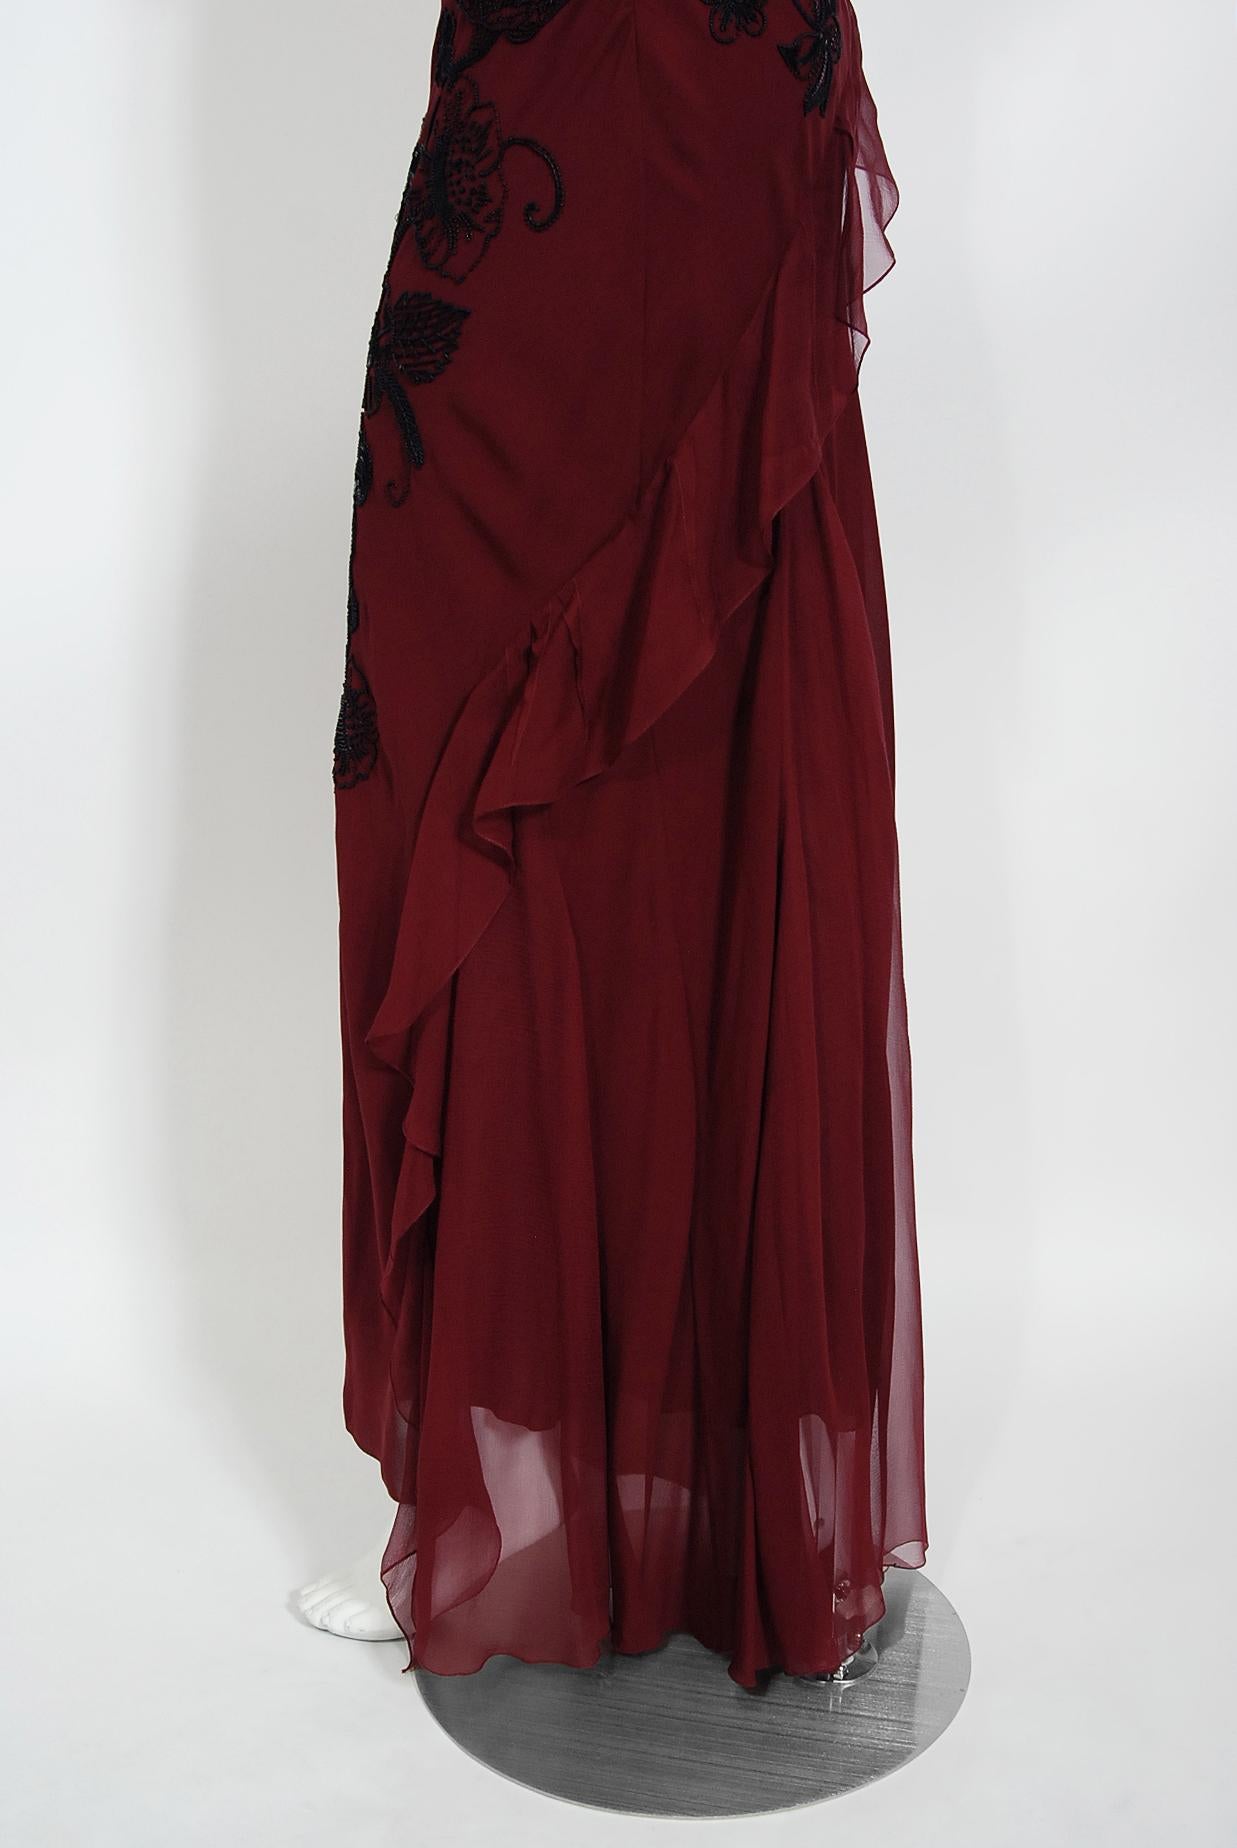 Women's Vintage 2006 Christian Dior by John Galliano Beaded Burgundy Silk Bias-Cut Gown